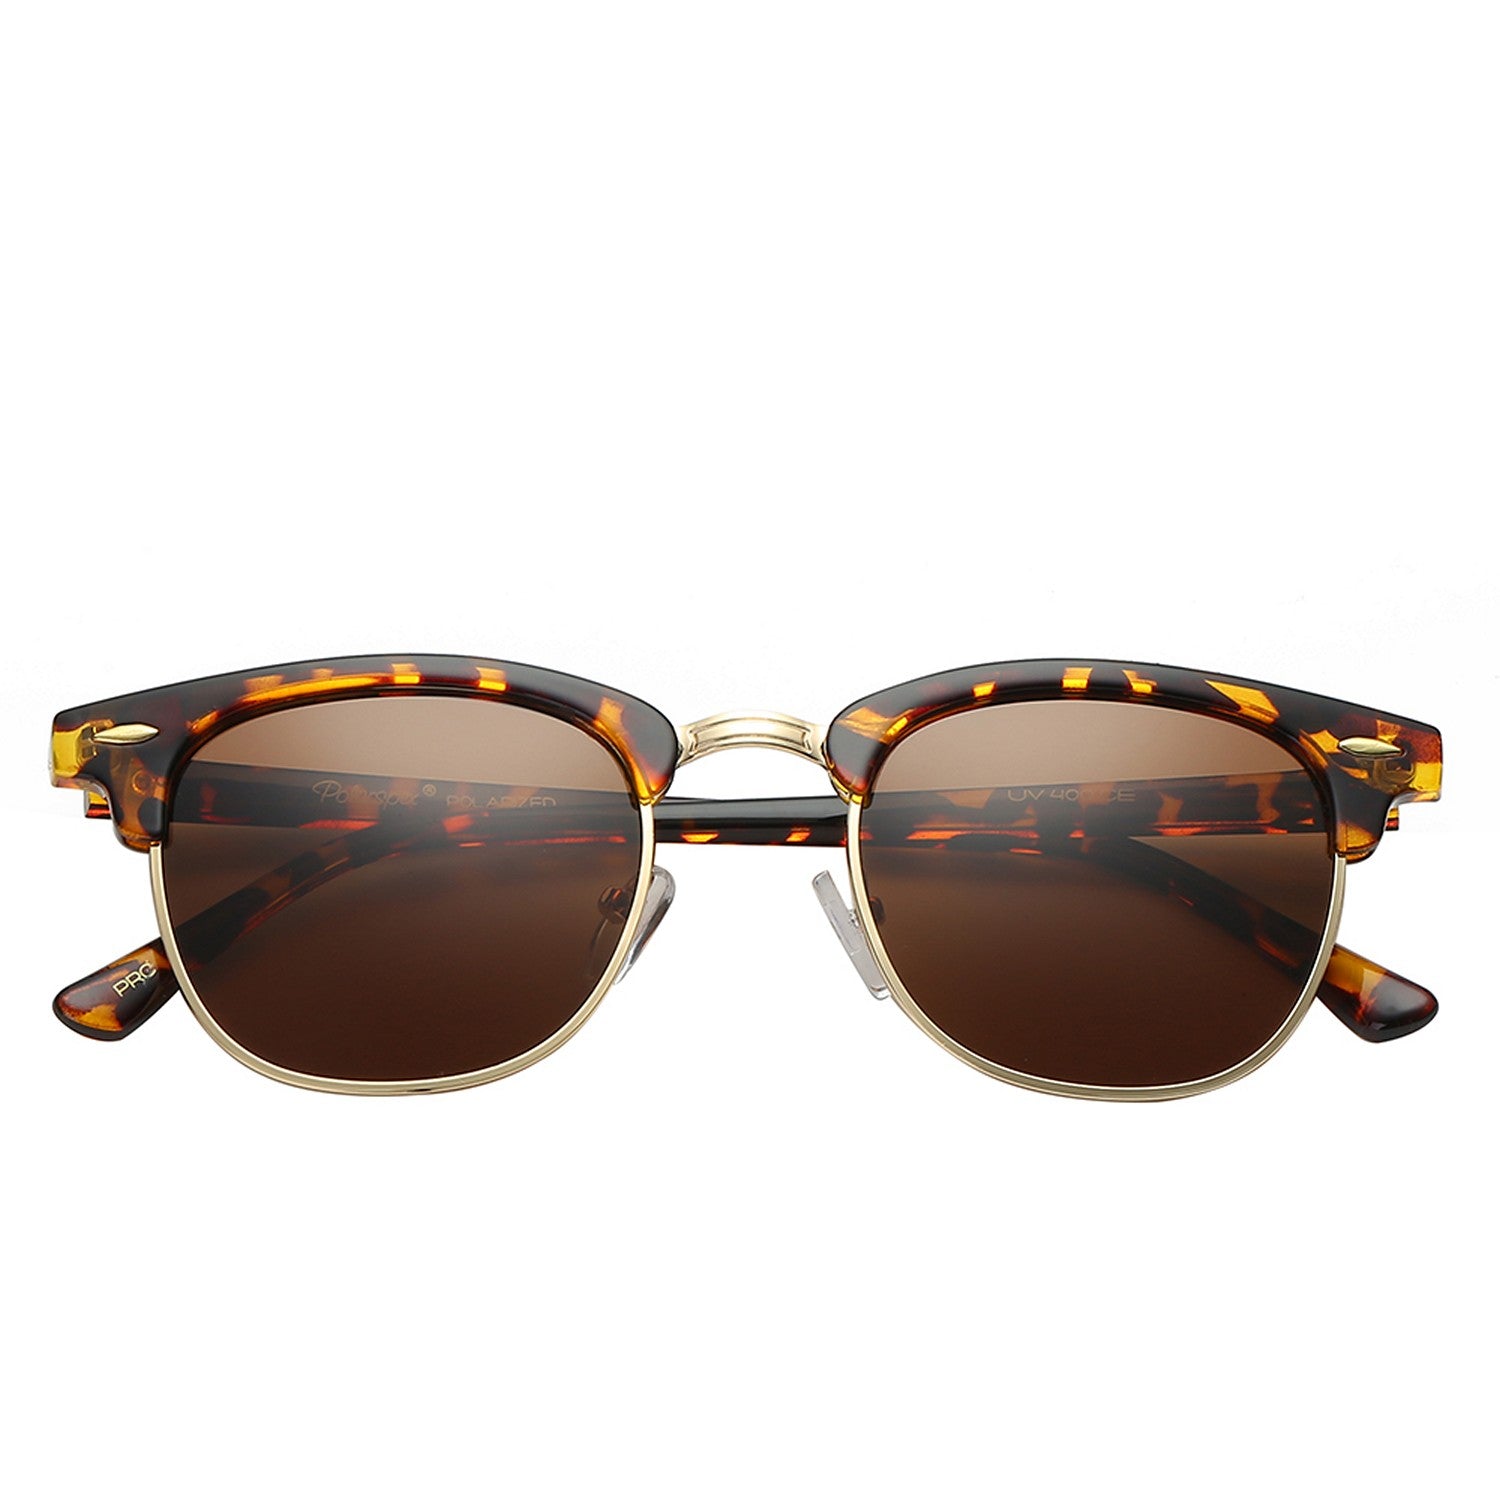 Polarspex Polarized Malcom Half Frame Semi-Rimless Style Unisex Sunglasses with Tortoise Brown Frames and Brown Lenses